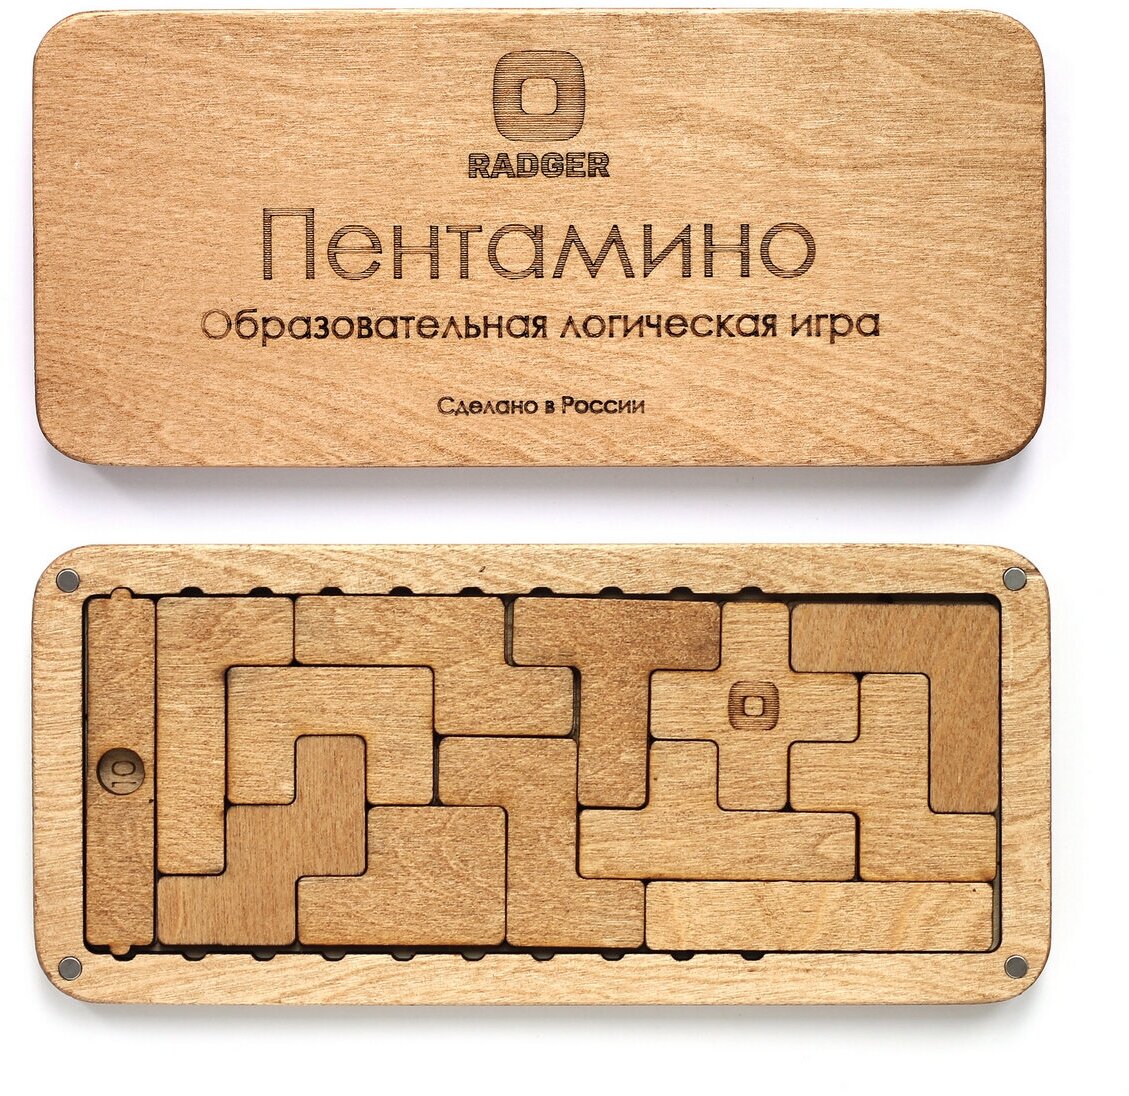 Пентамино (Тетрис, Катамино) / Логическая игра головоломка из дерева с заданиями